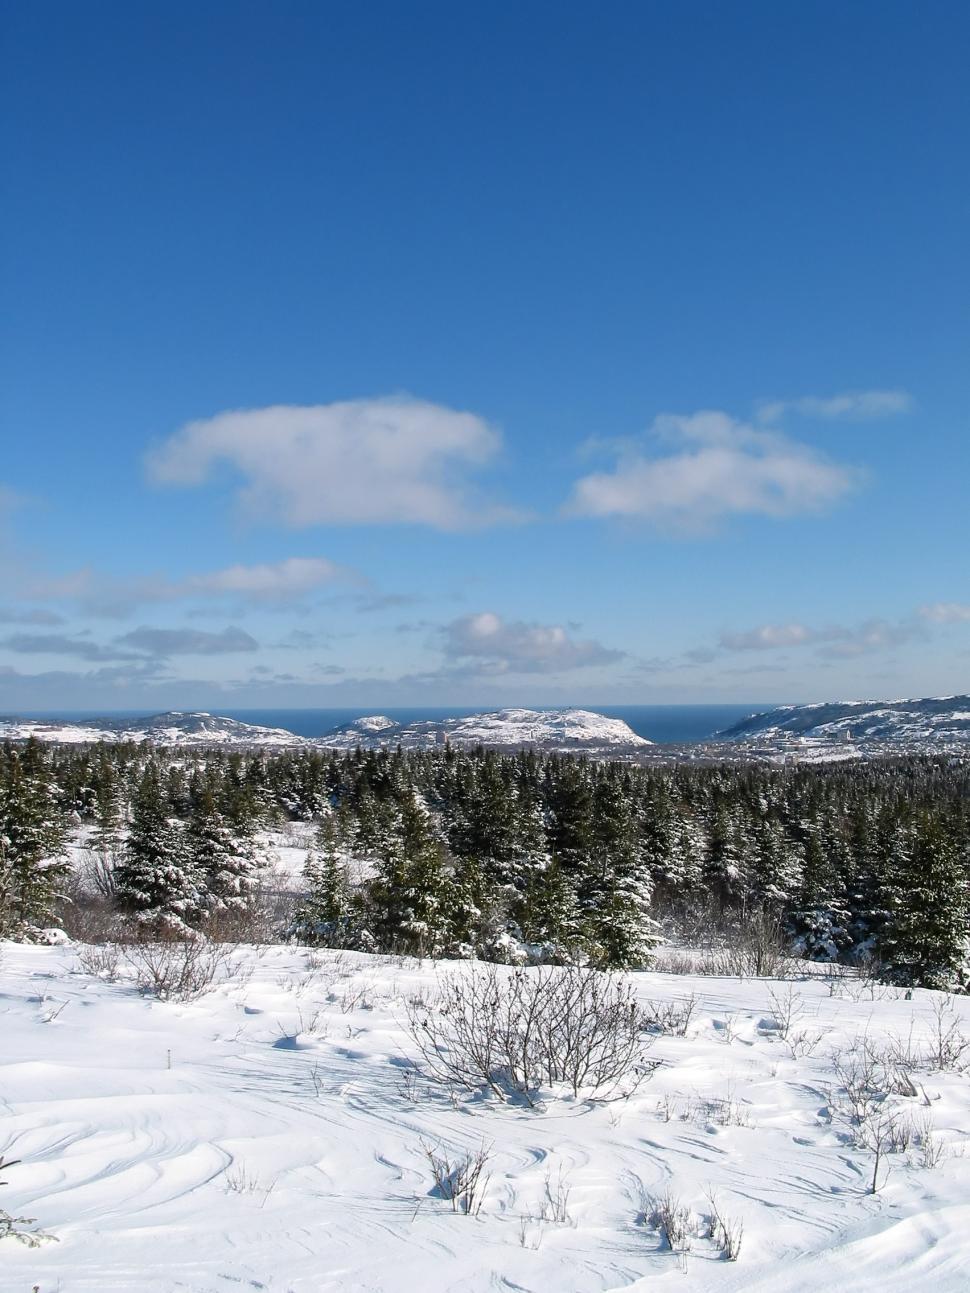 Free Image of Winter Landscape 